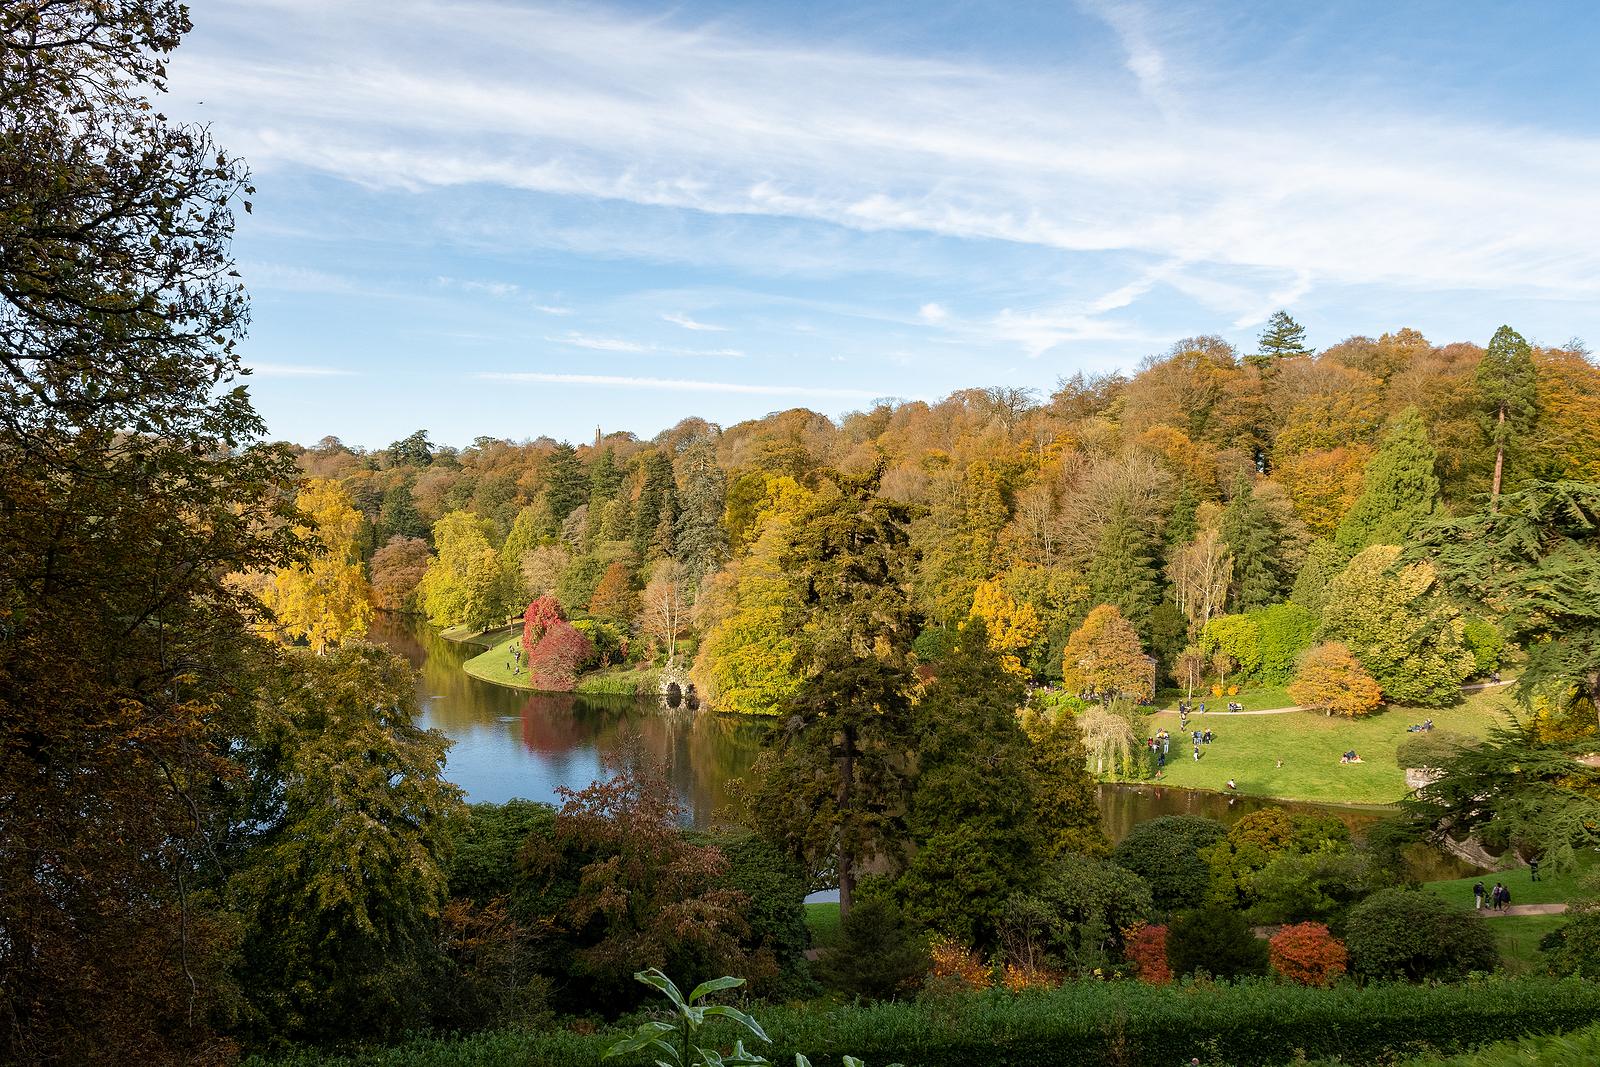 5 Stunning Public Gardens In England To Visit This Autumn